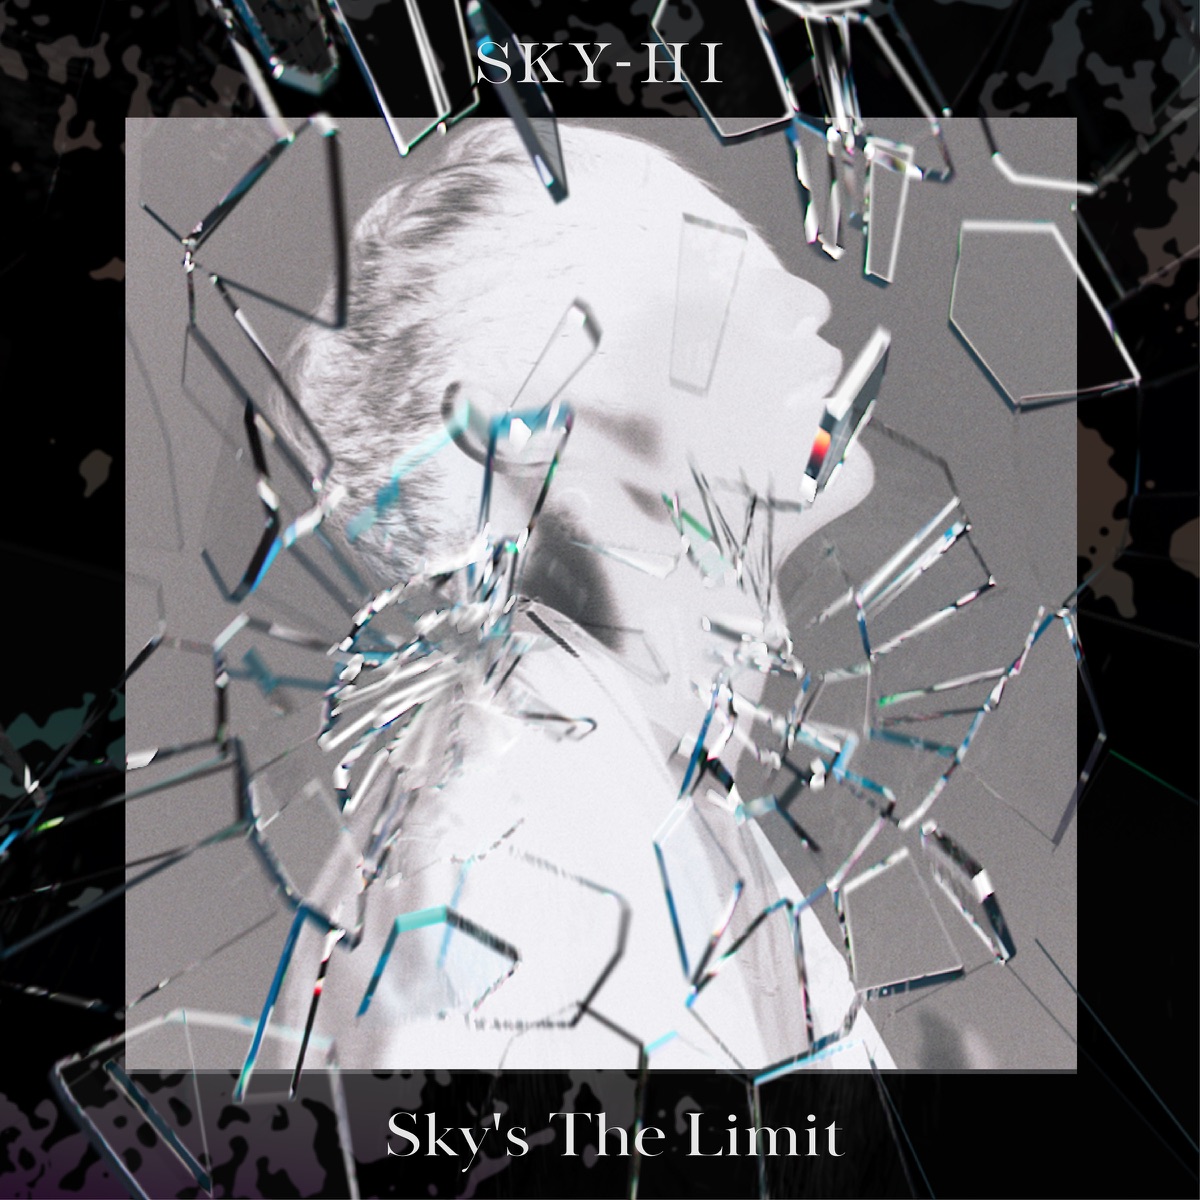 『SKY-HI - Sky's The Limit 歌詞』収録の『Sky's The Limit』ジャケット